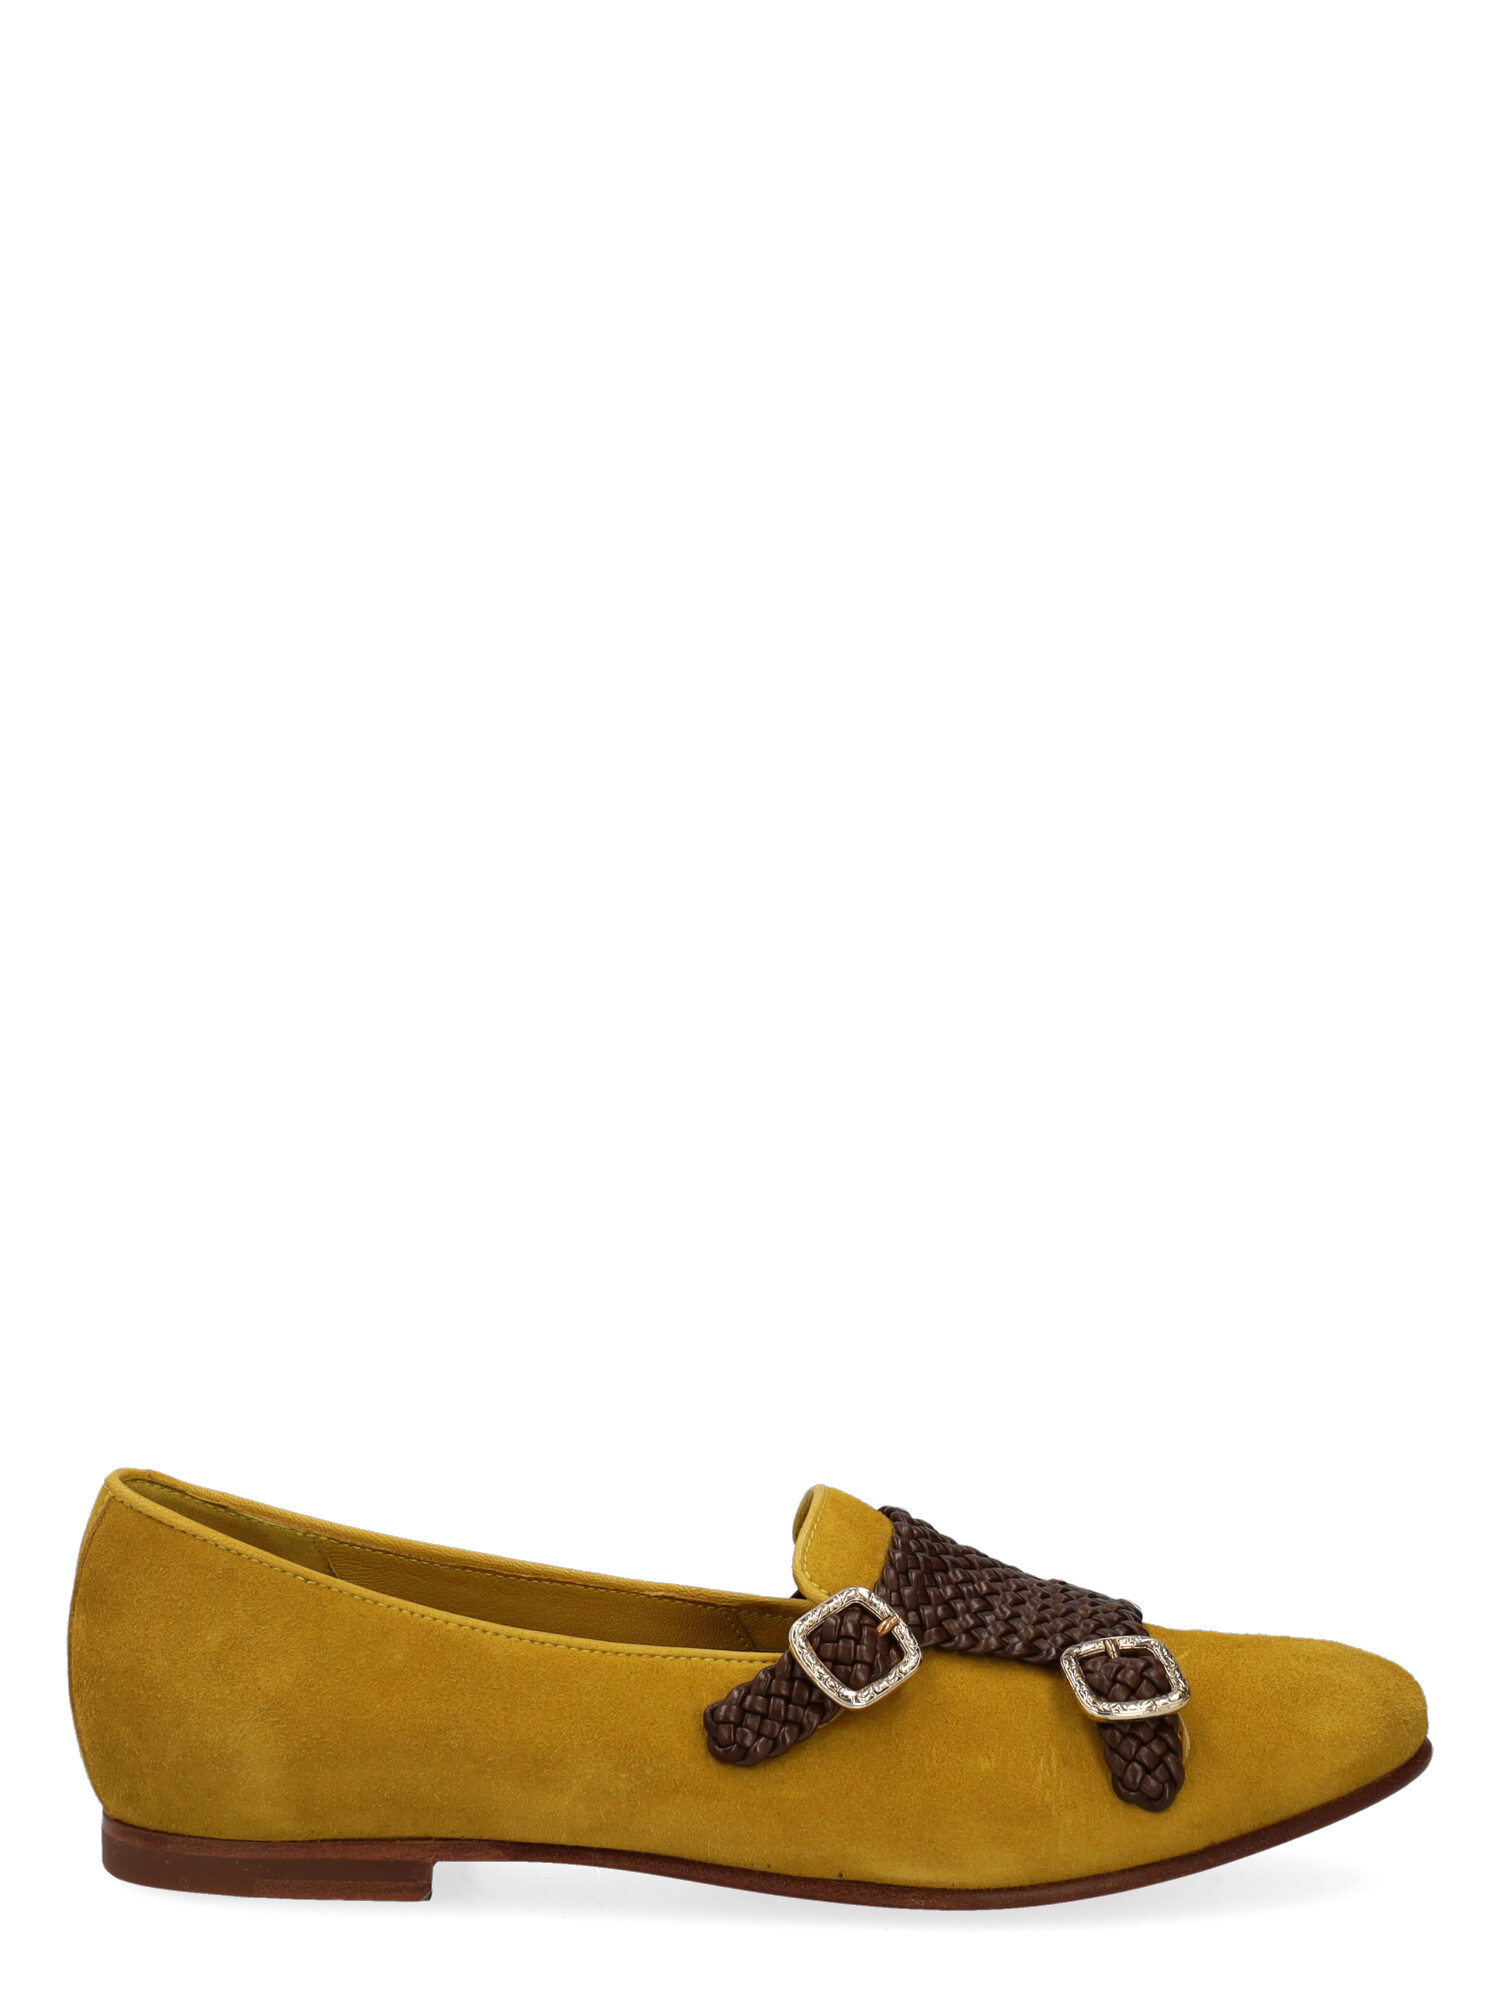 Santoni Femme Mocassins Brown, Yellow Leather